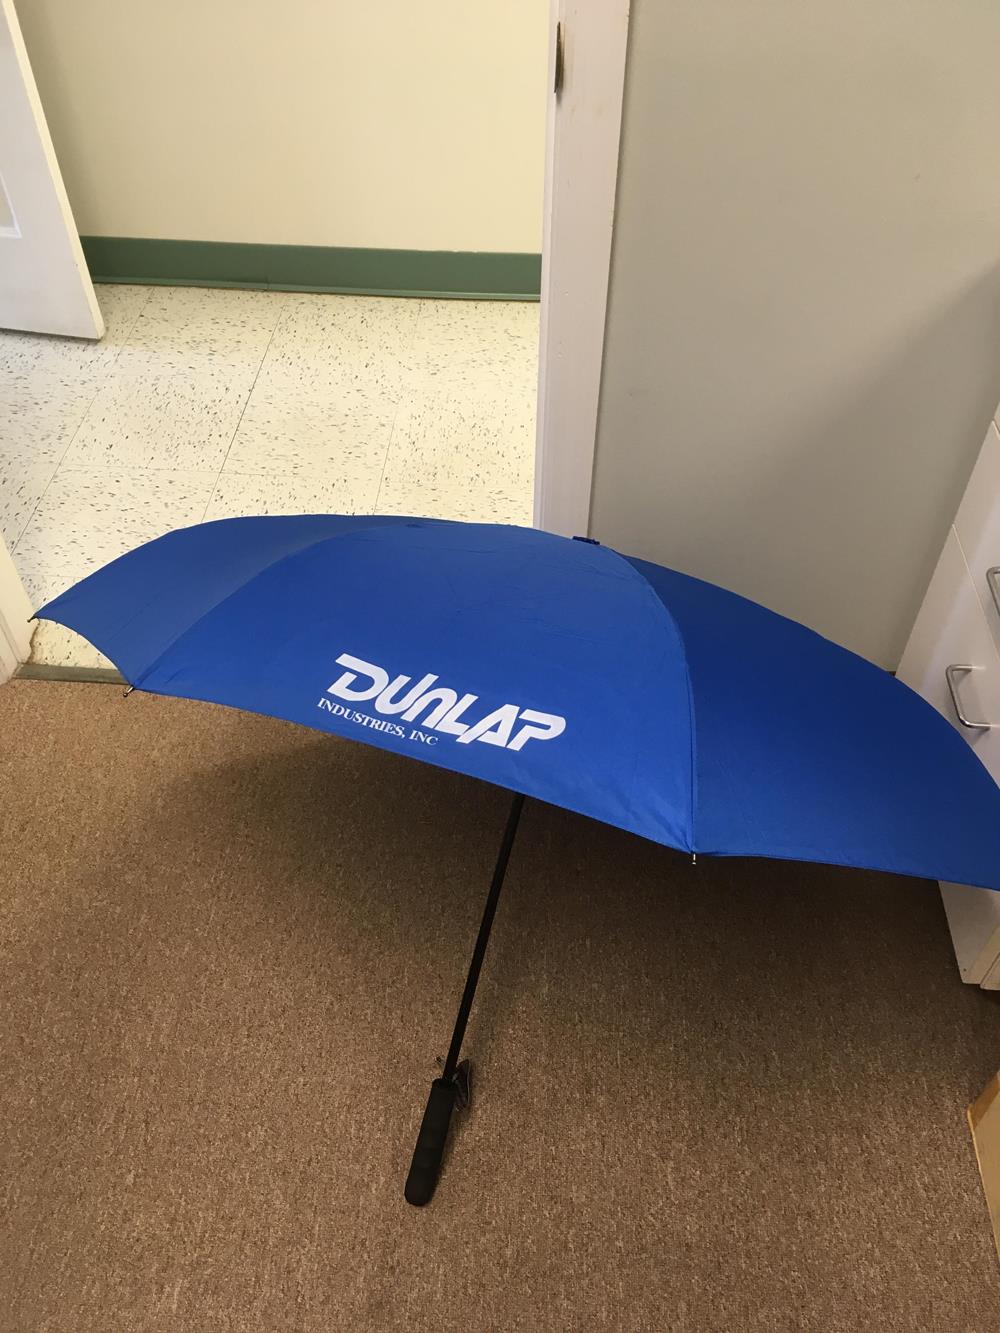 a blue umbrella on the floor